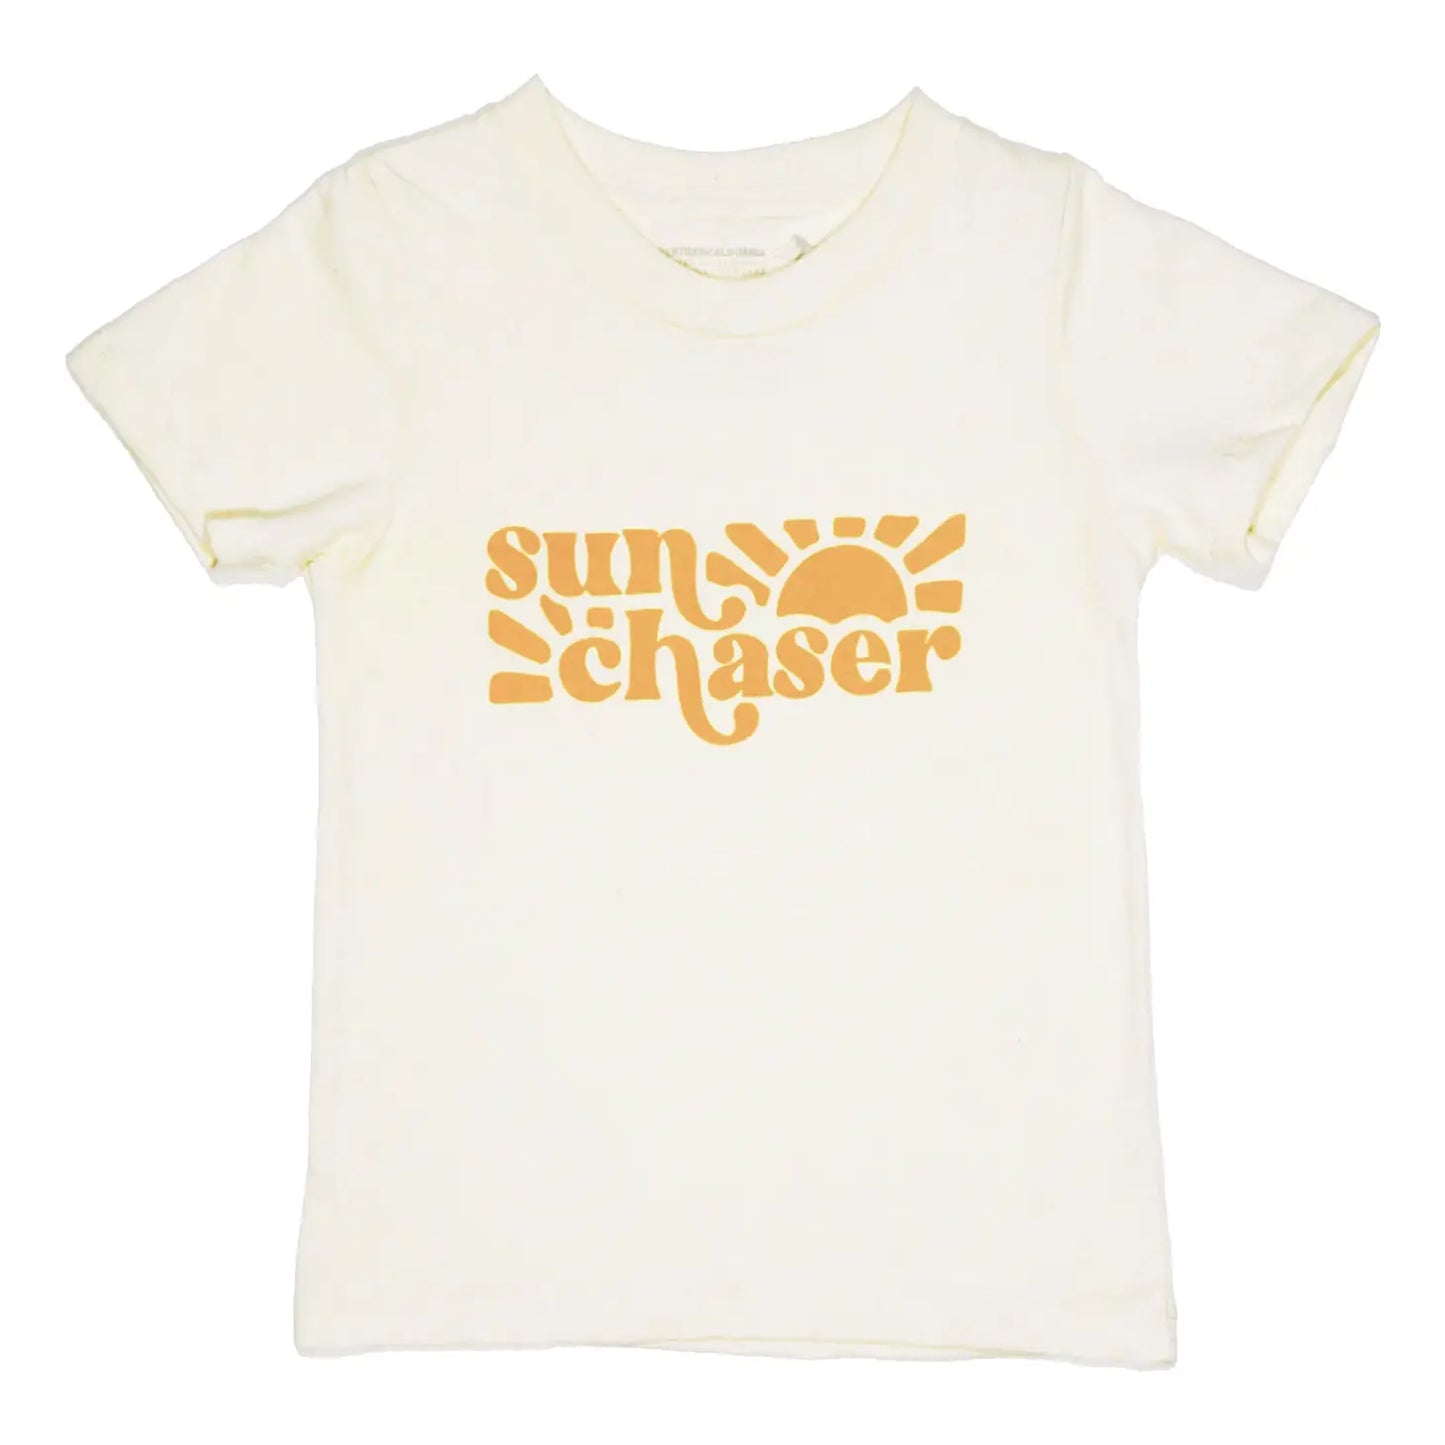 Sun Chaser Organic Cotton Kids Tee Shirt